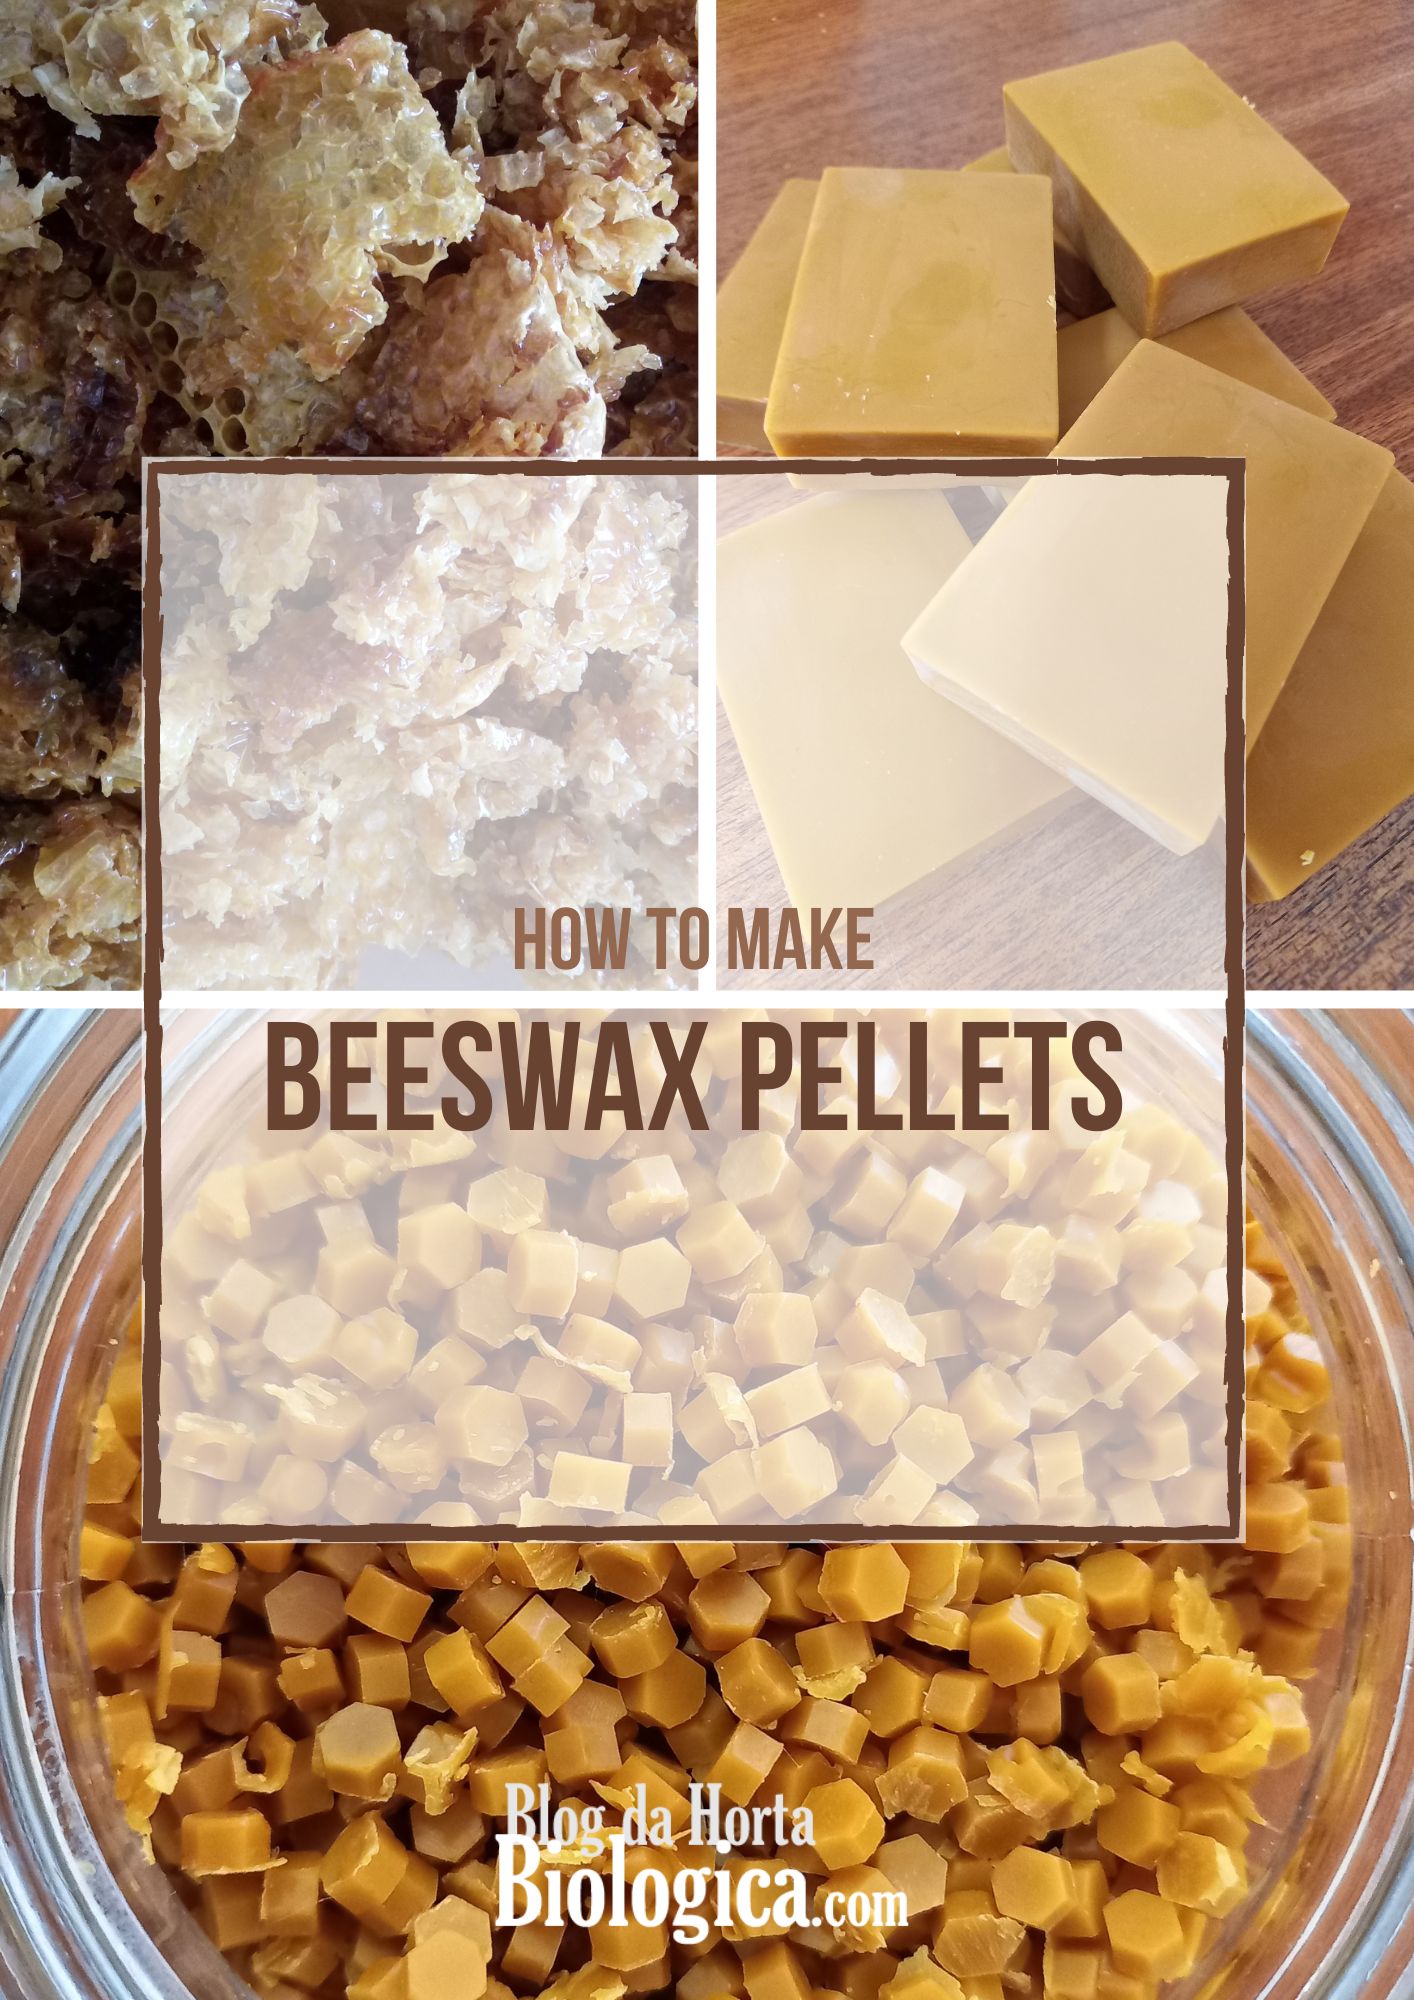 Blog da Horta Biológica: How To Make Beeswax Pellets at Home